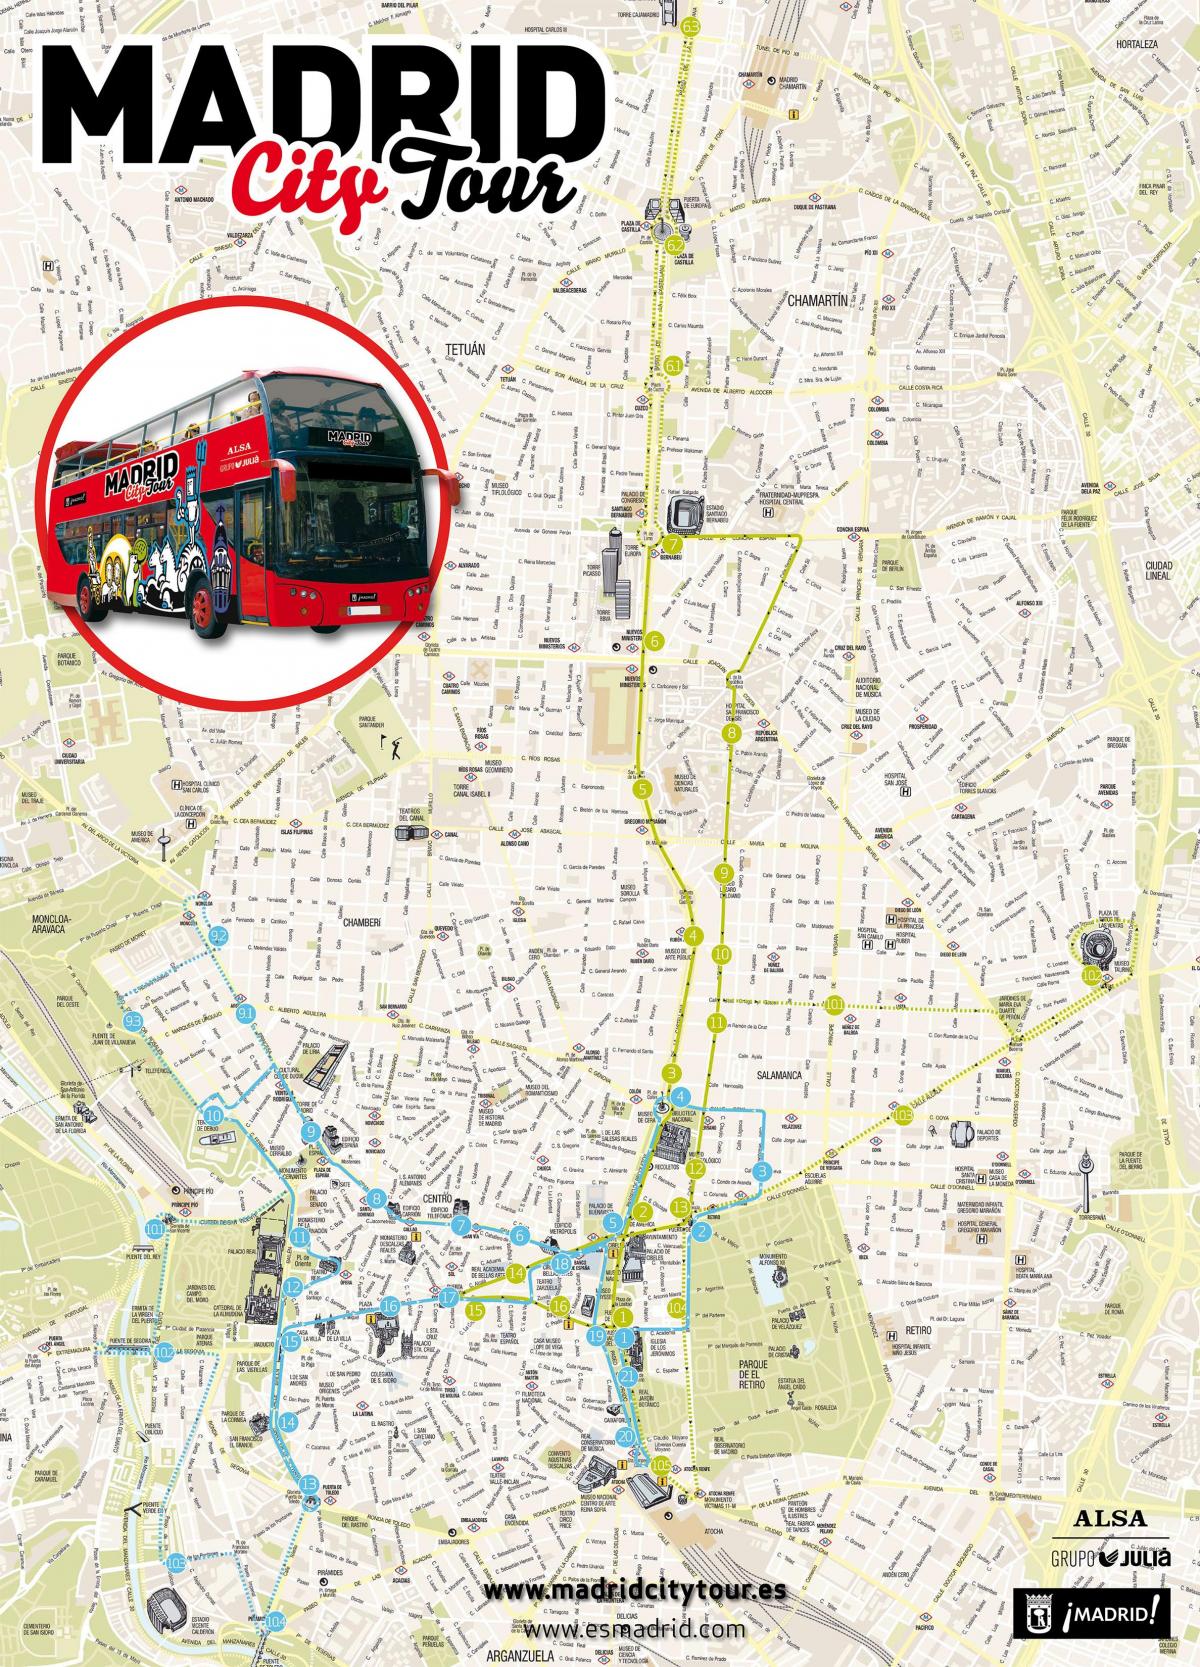 Madrid city bus tour hartă